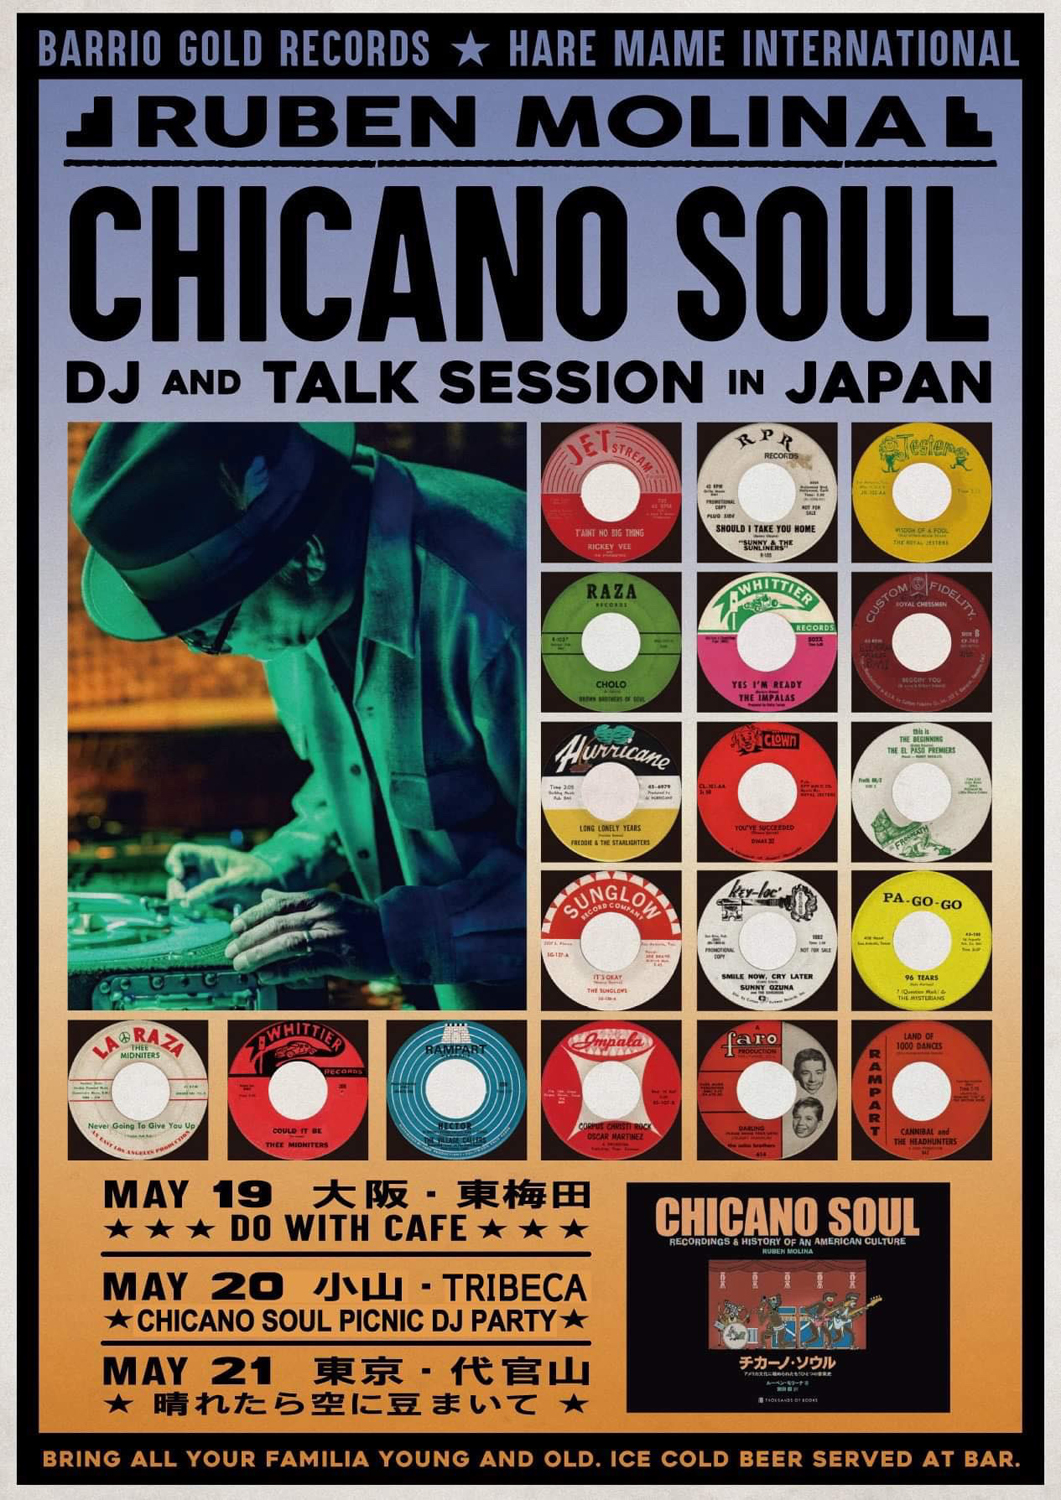 Ruben Molina "Chicano Soul DJ and Talk Session in Japan"